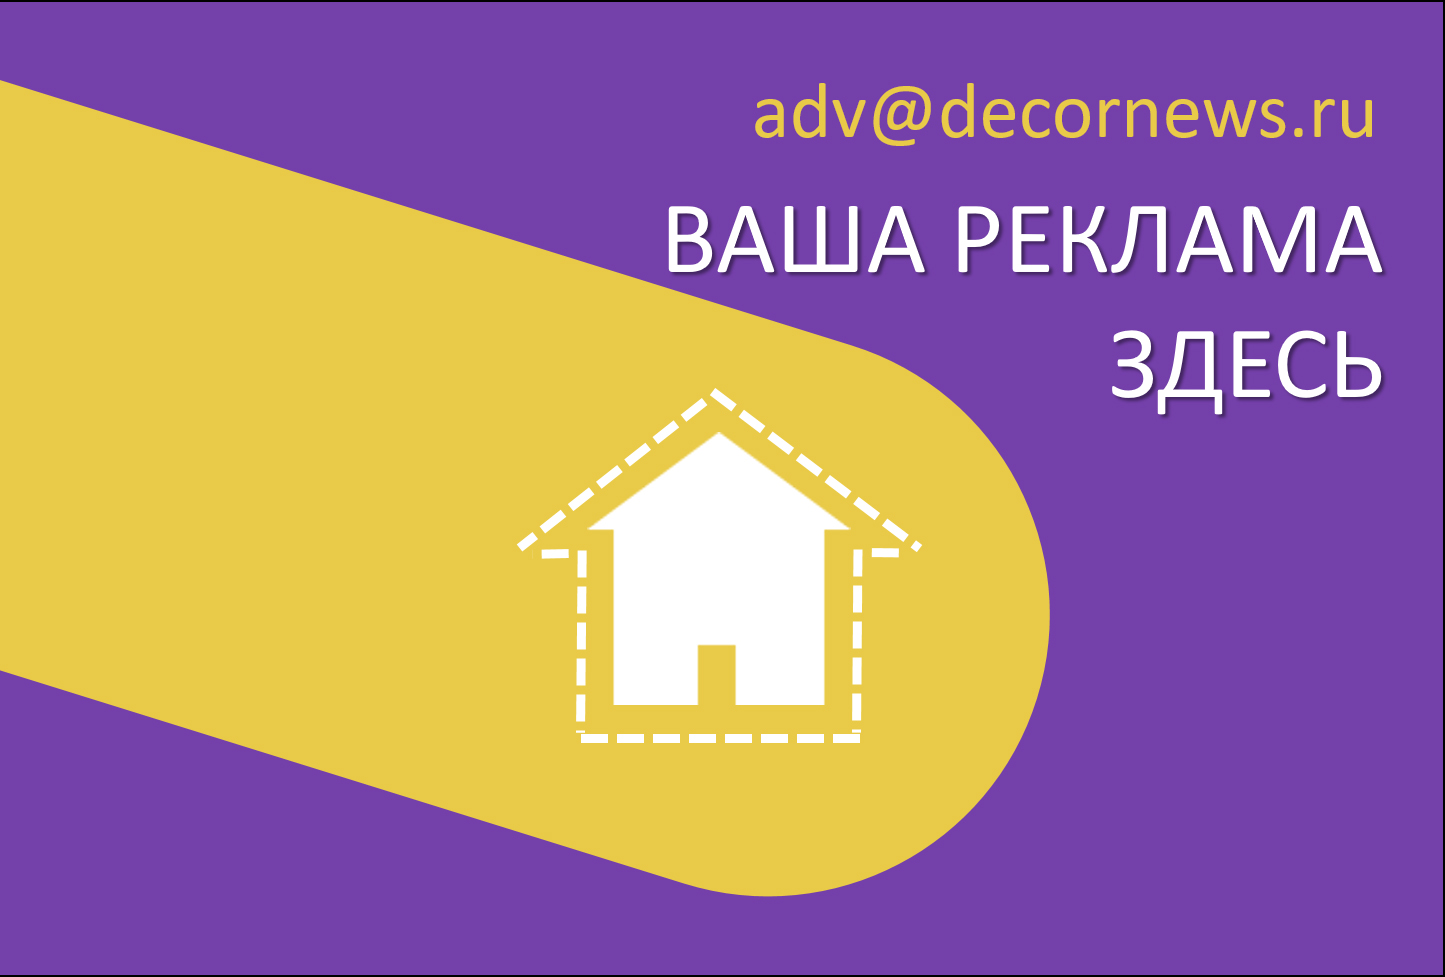 Реклама на портале о дизайне и архитектуре Decornews.ru